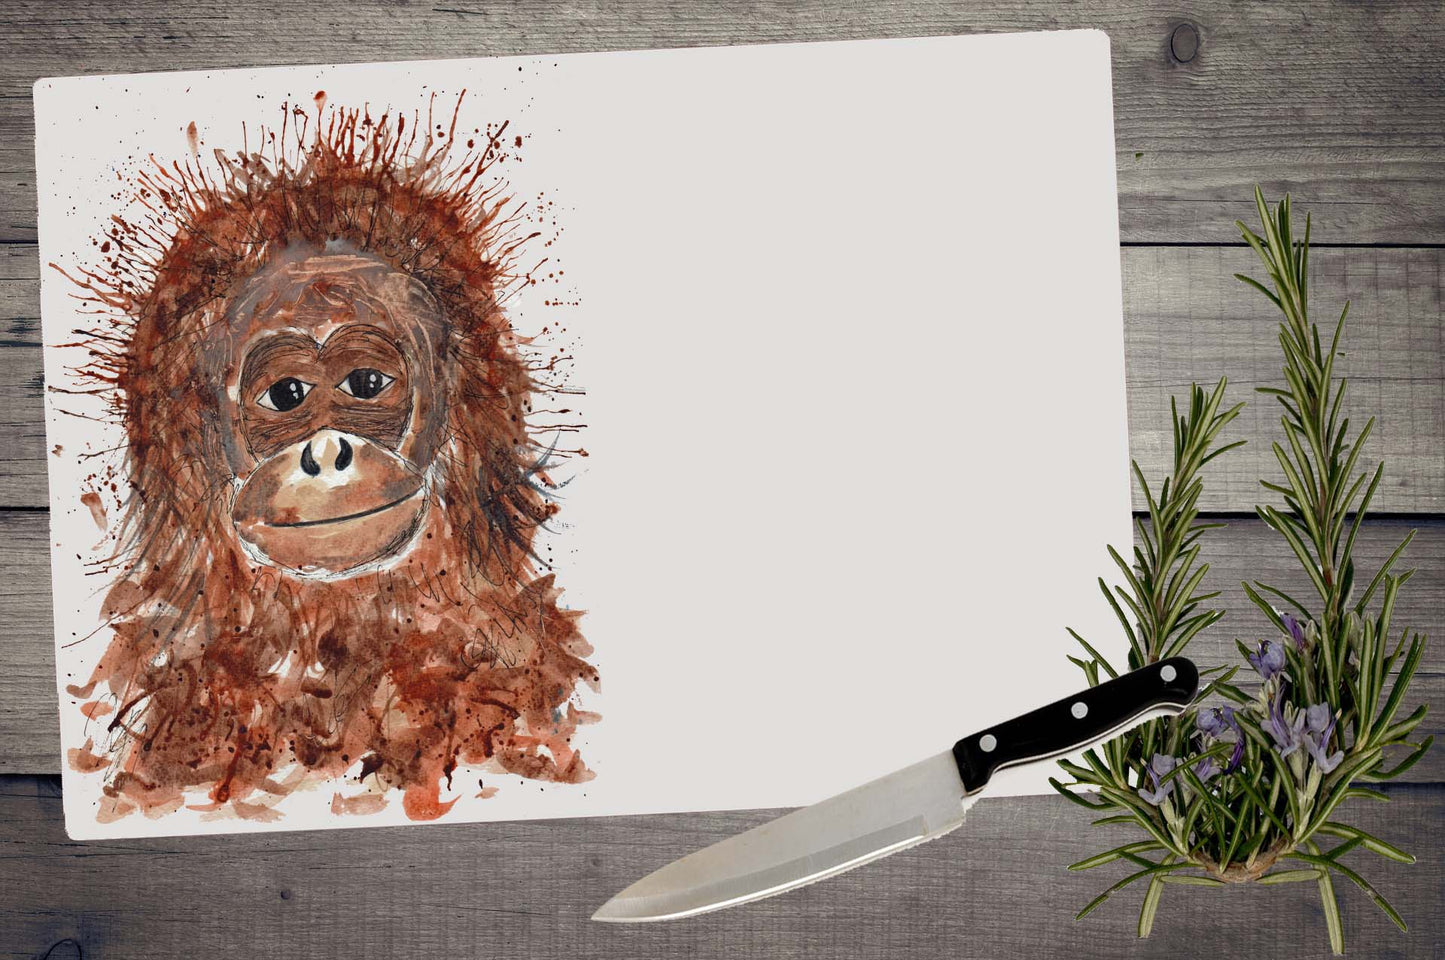 Orangutan / Monkey chopping board / Worktop saver